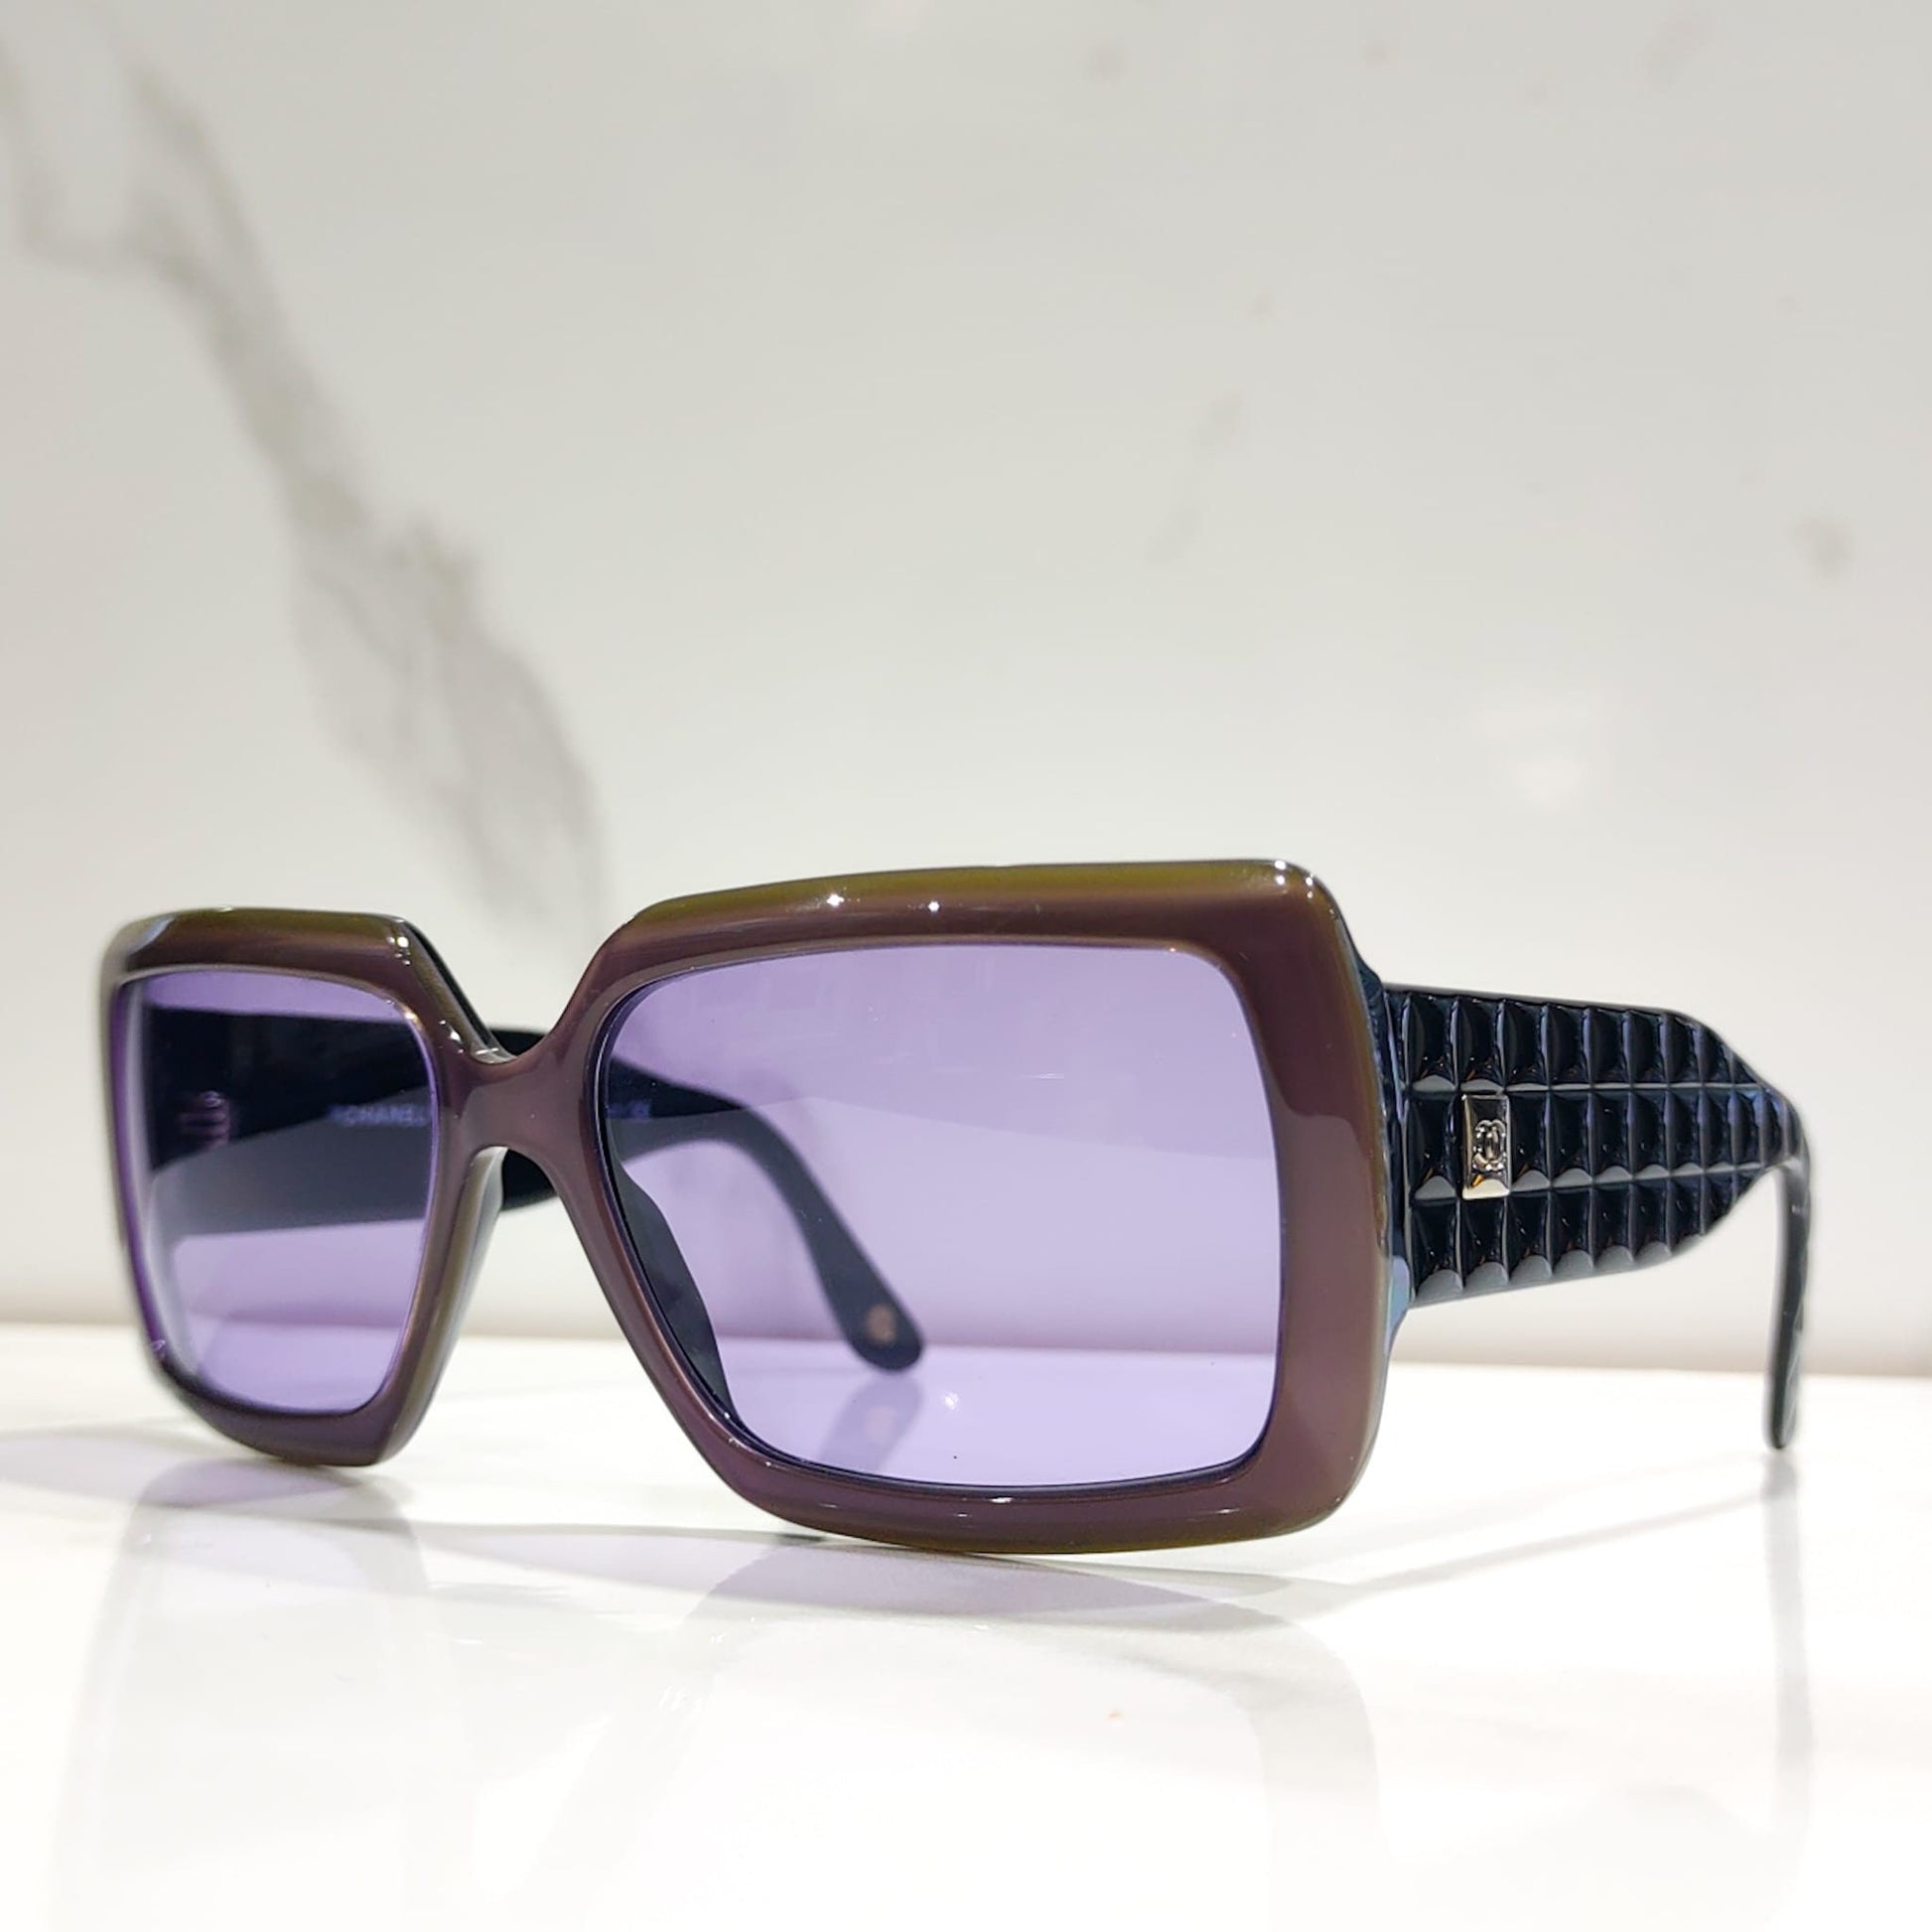 Chanel sunglasses model 5029 lunette brille Y2k 90s shades